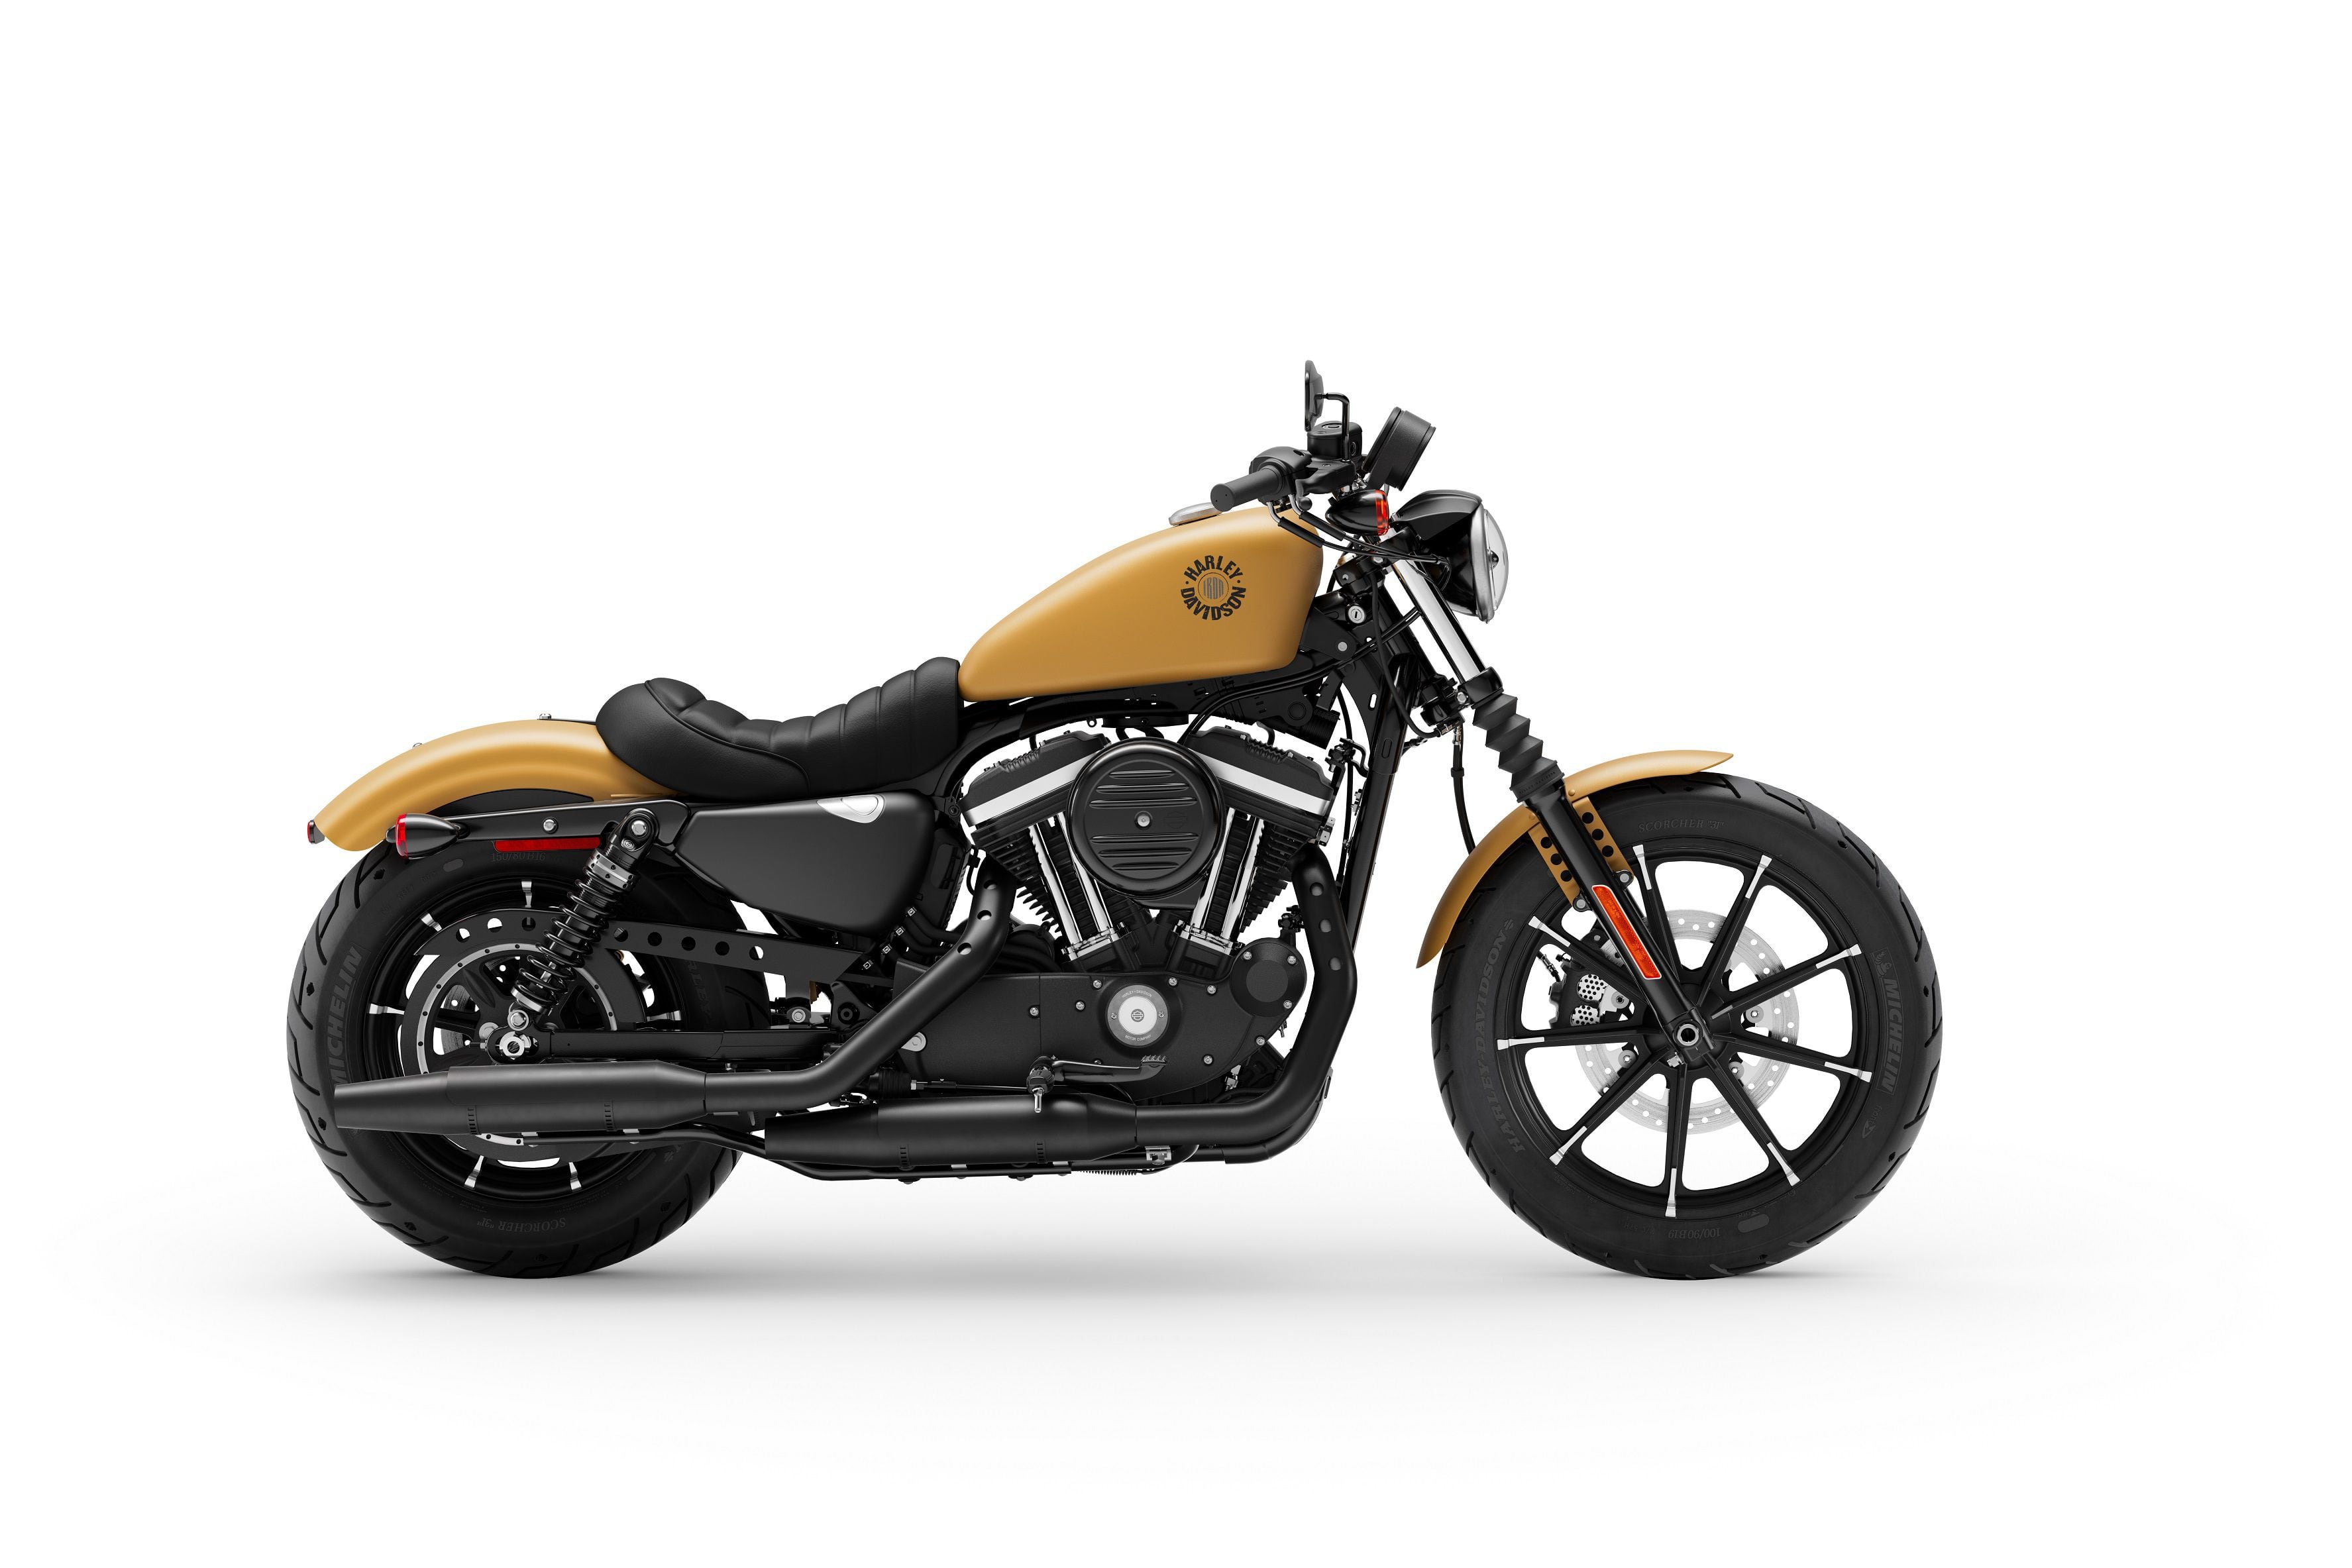 2020 Harley-Davidson Sportster Iron 883 Buyer's Guide: Specs